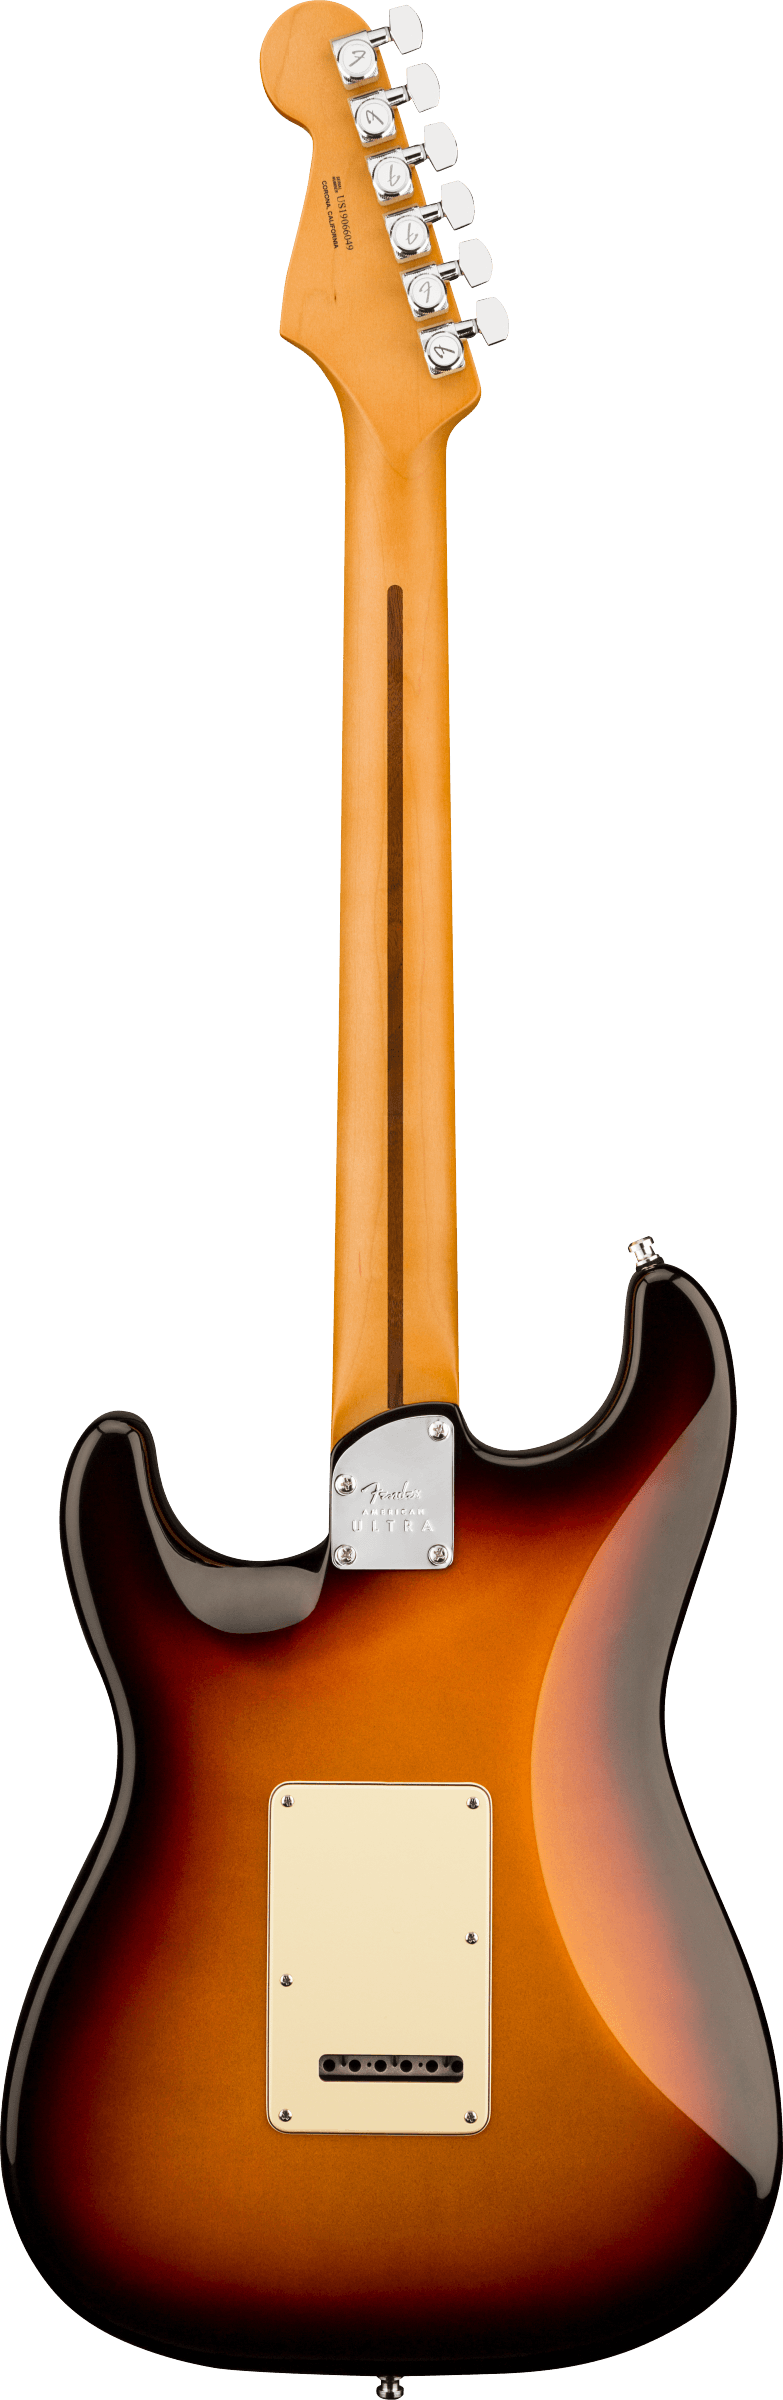 Back of Fender Stratocaster electric guitar Ultraburst color Tone Shop Guitars DFW